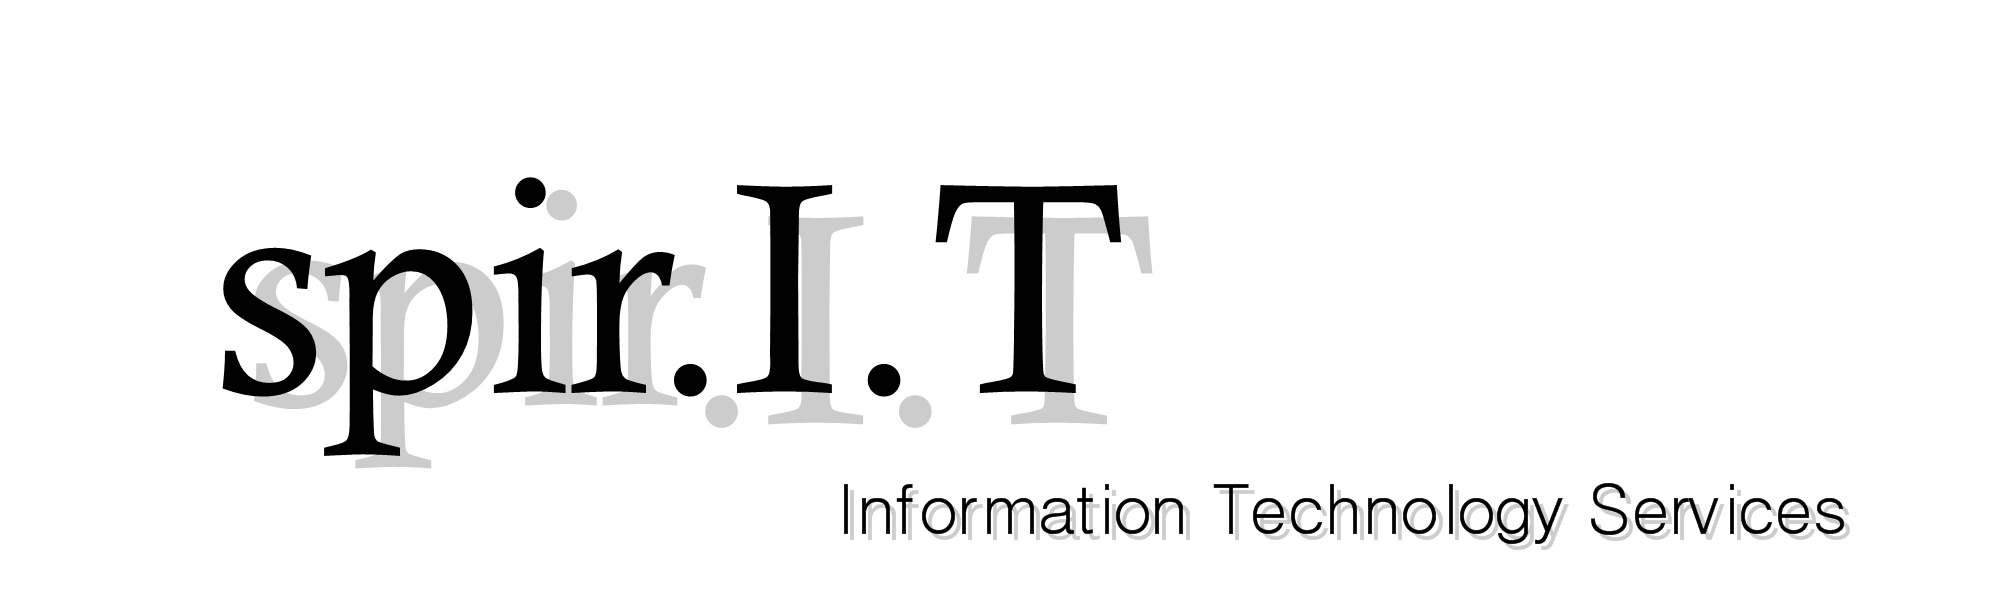 spir.I.T.Information Technology Services